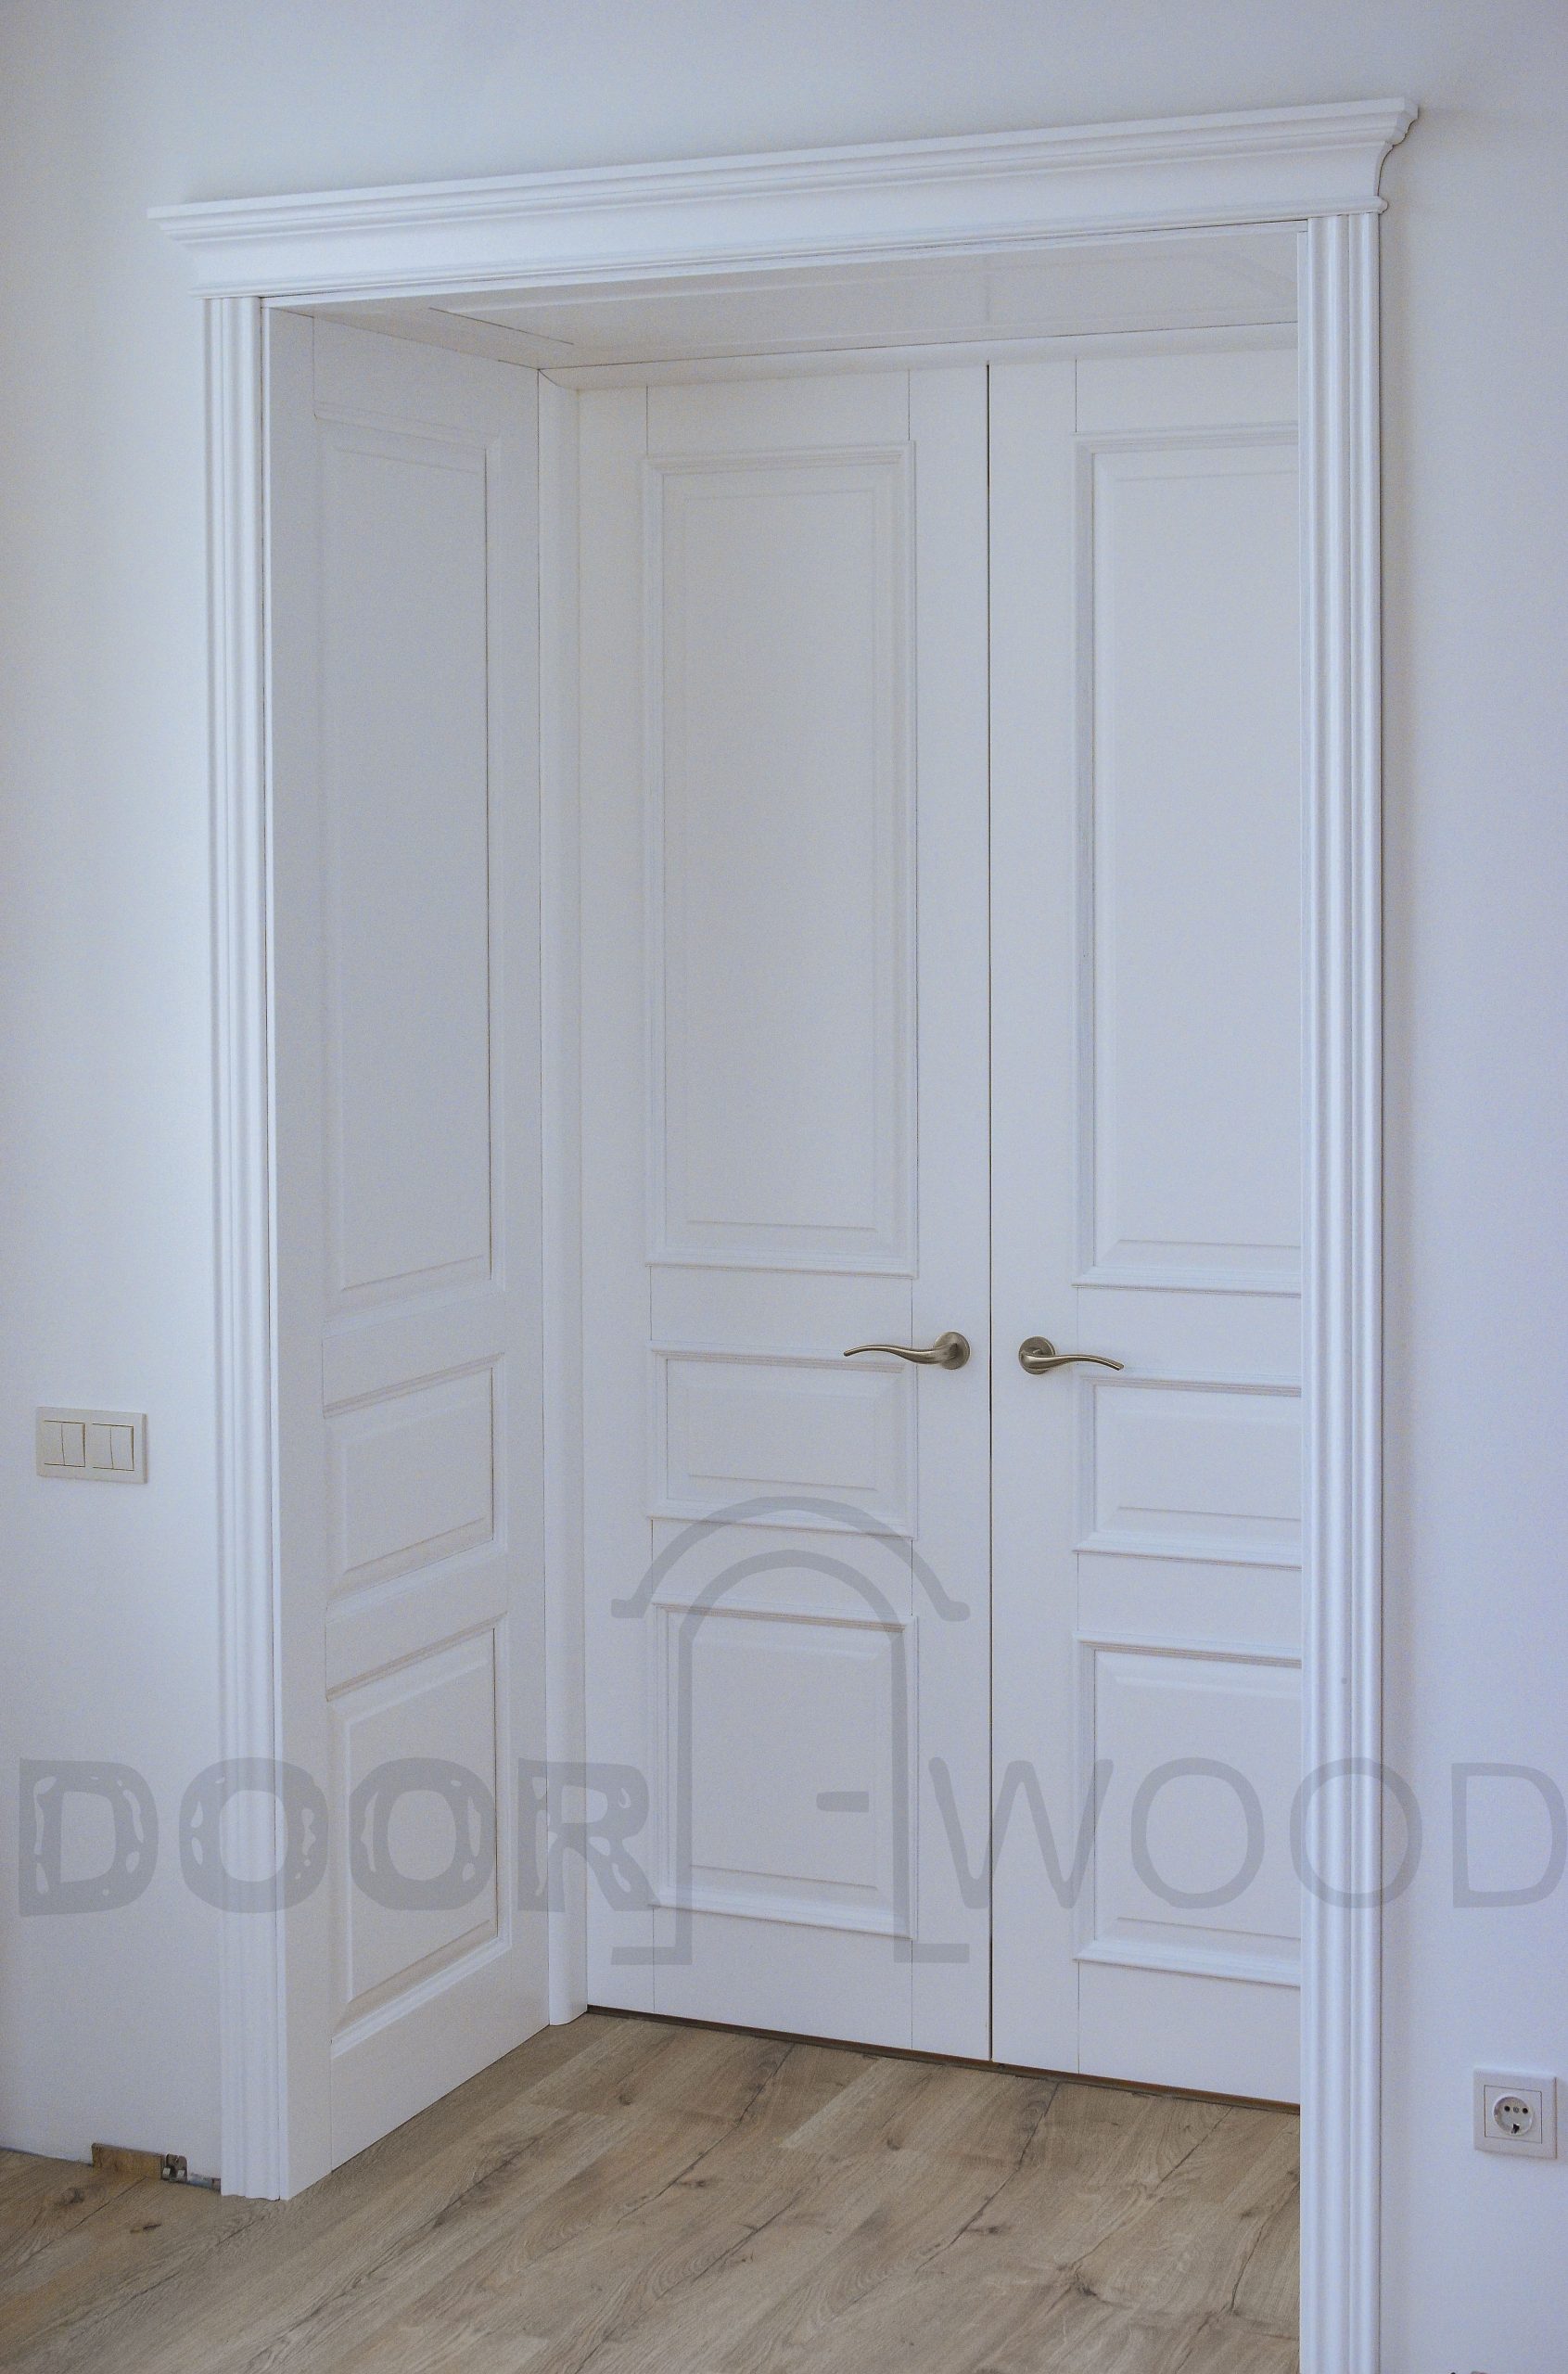 Классические белые двери Optima 1.1 Фабрика дверей DoorWooD22